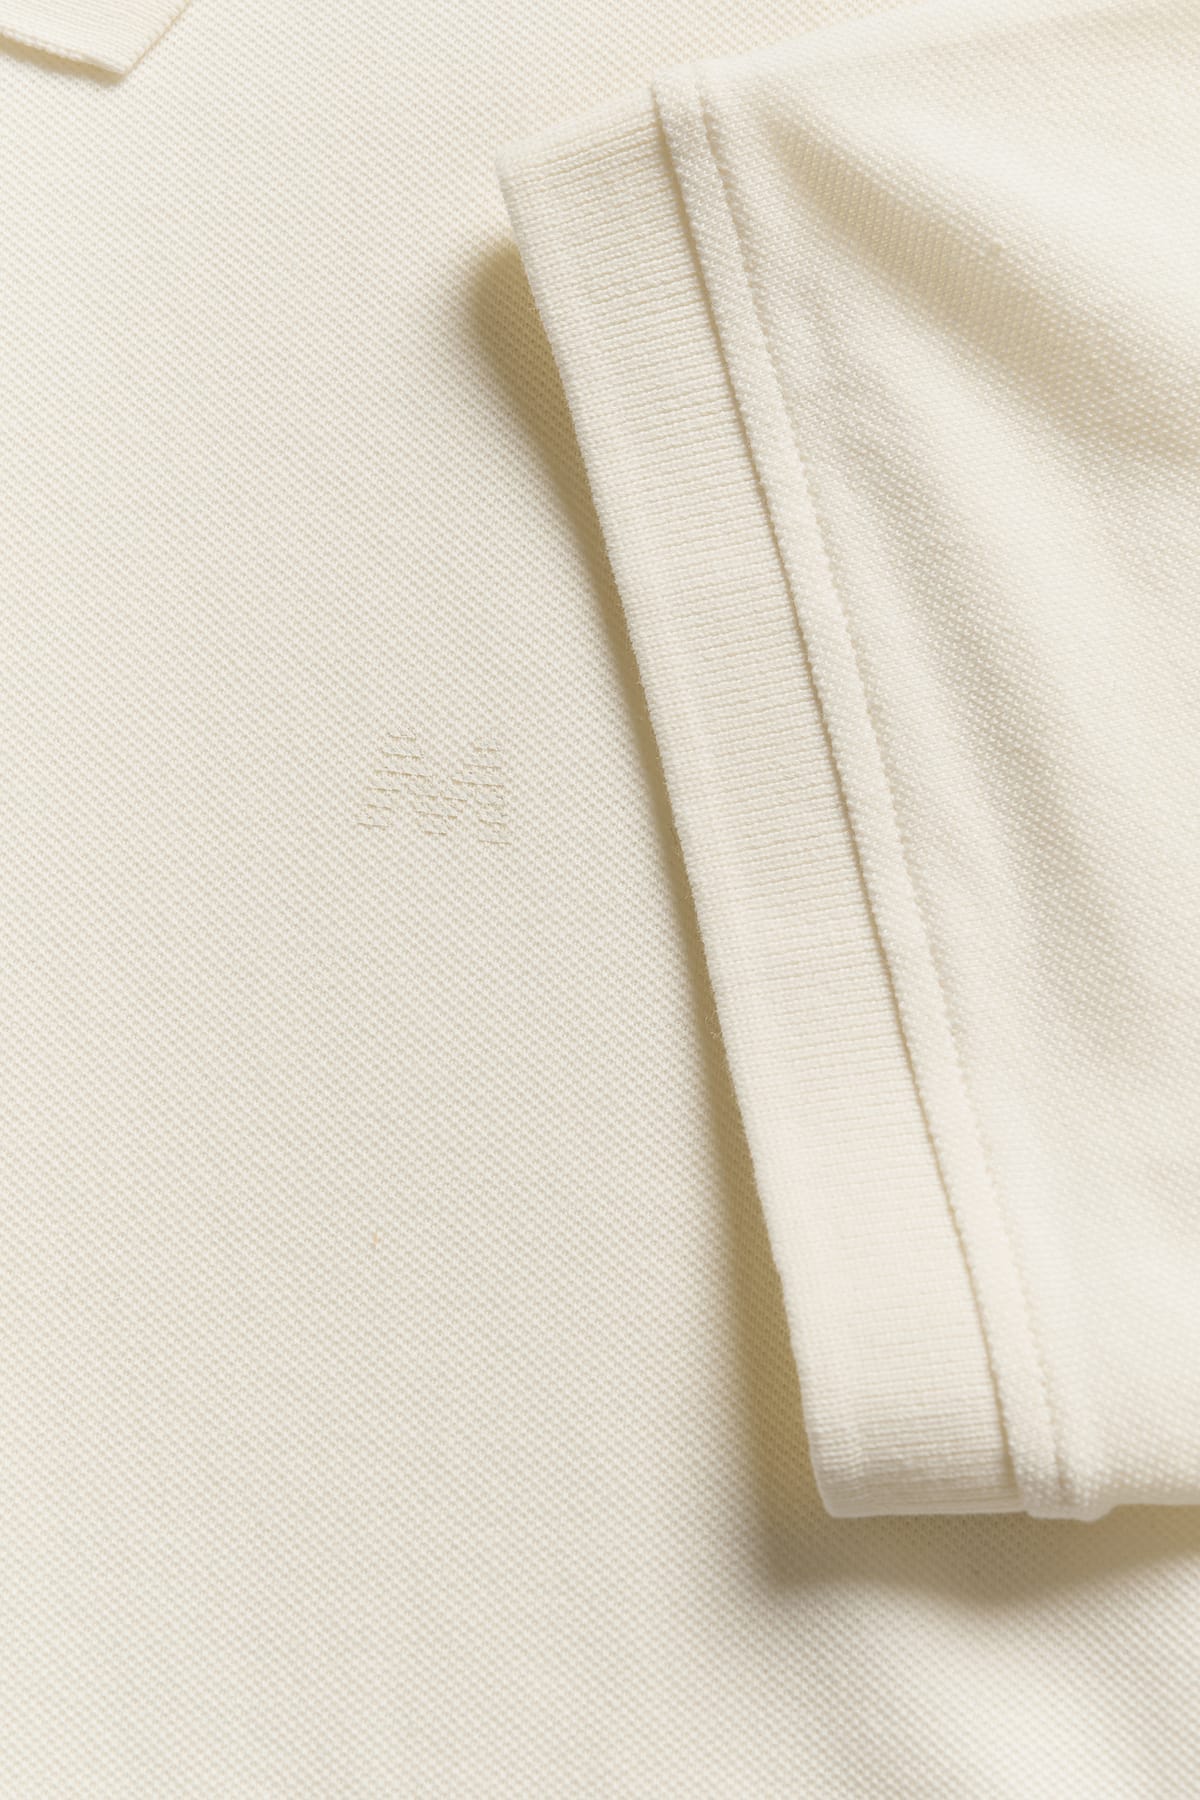 T-Shirt Polo MApoleo Melange Off White T-Shirt Matinique 